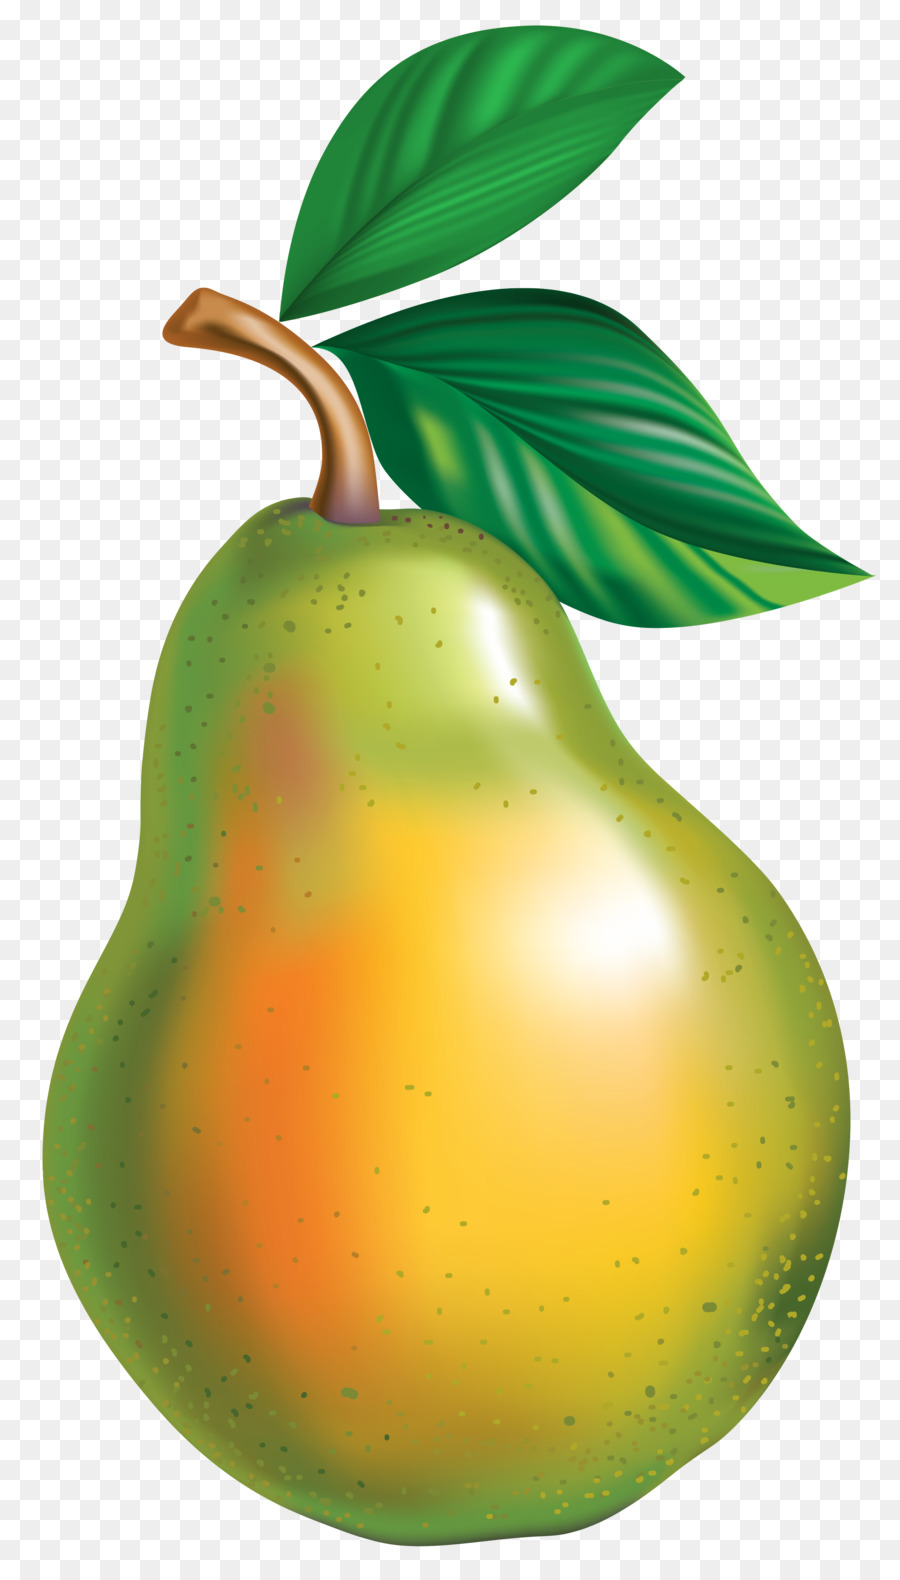 Asian pear Fruit Clip art - pear png download - 2367*4144 - Free Transparent Asian Pear png Download.